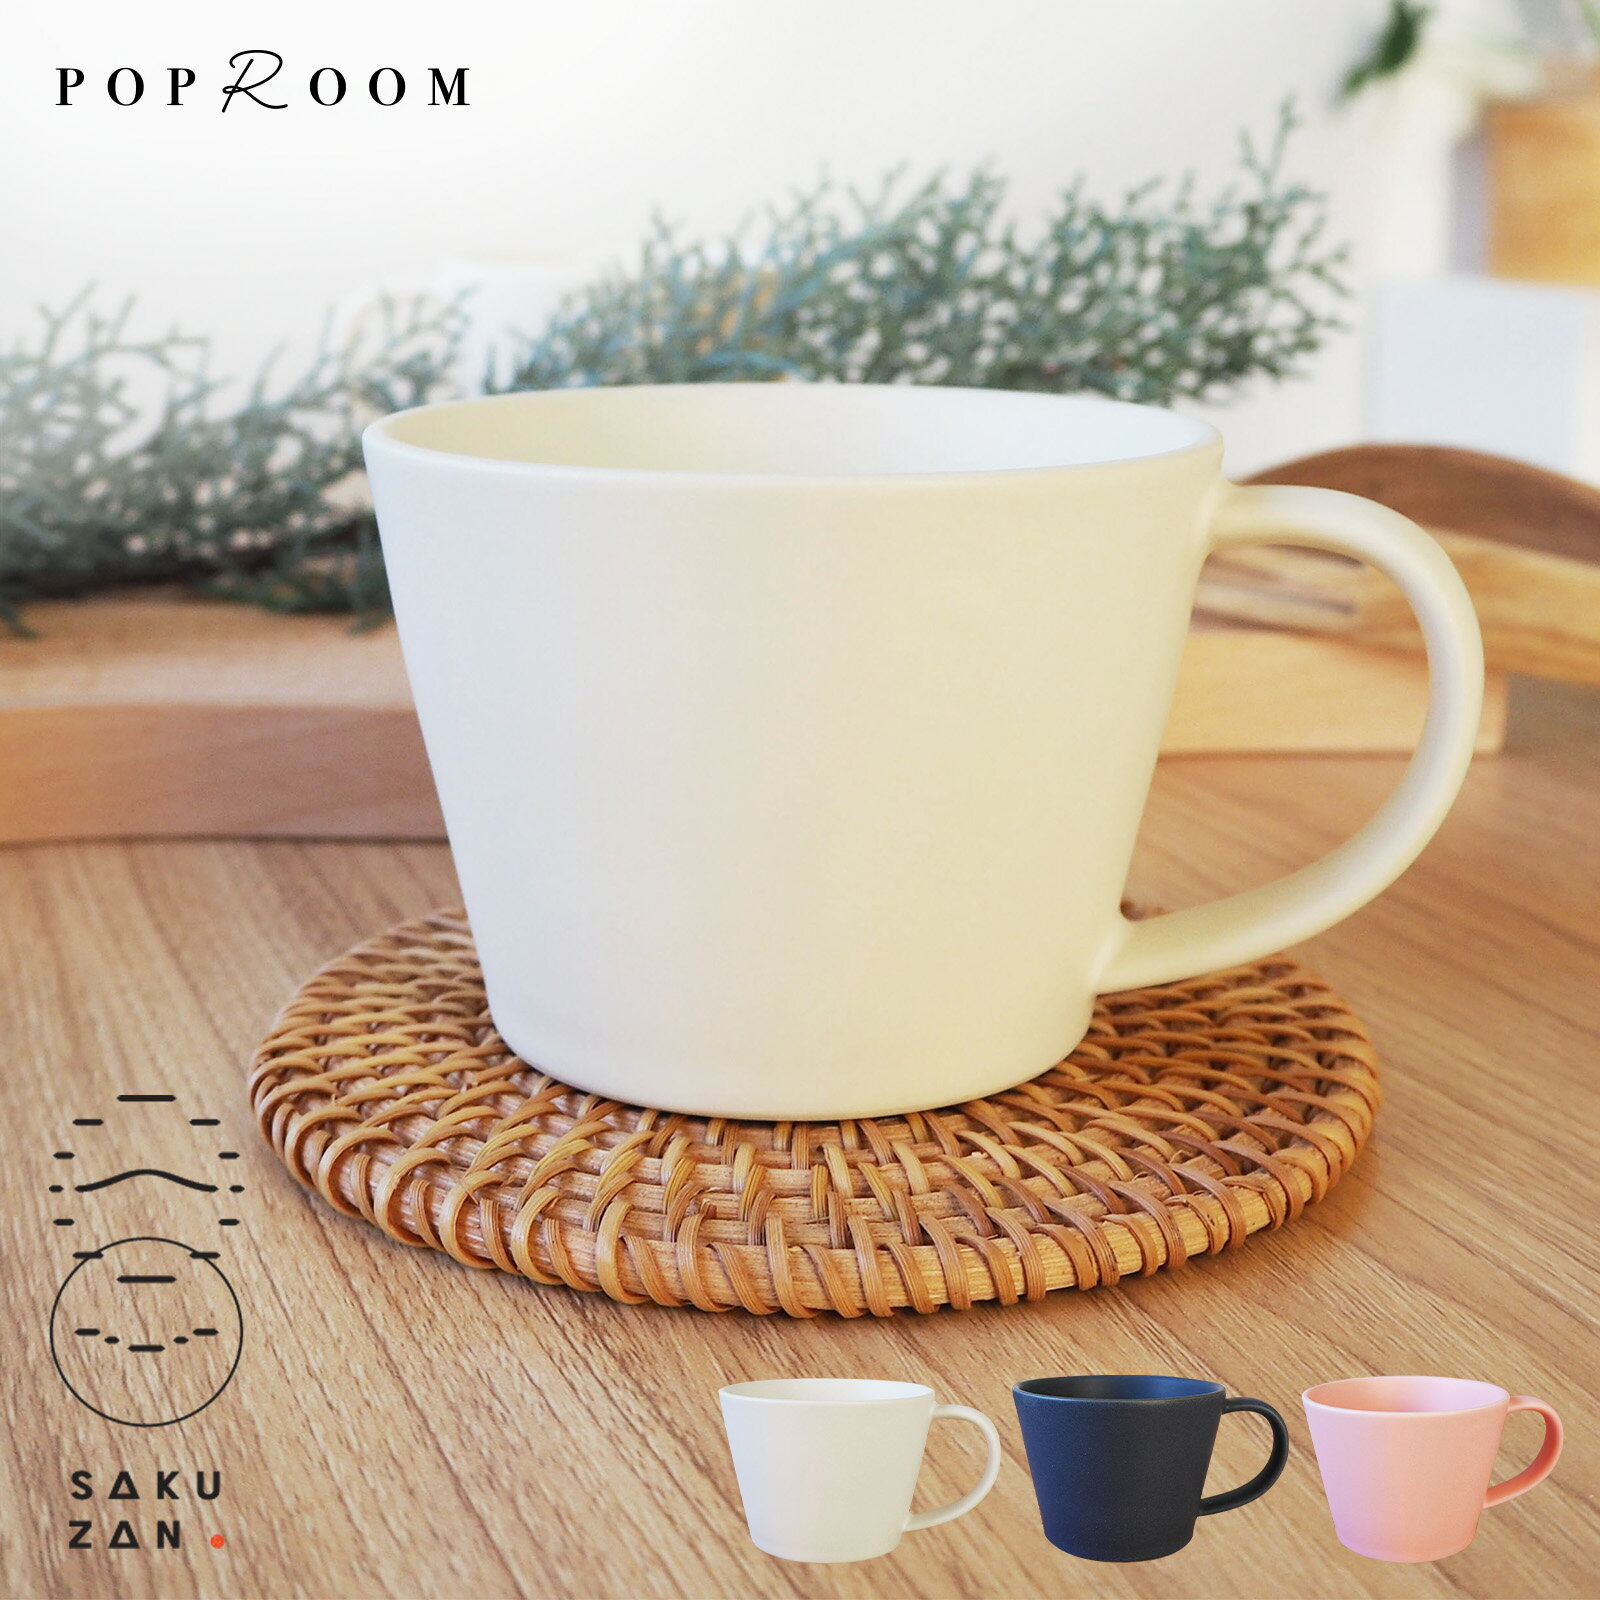 SAKUZAN Sara コーヒーカップ 【全3色】 おしゃれ 北欧 韓国 作山窯 日本製 マグカップ 大きい かわいい コップ カフェ お茶 食器 食卓 磁器